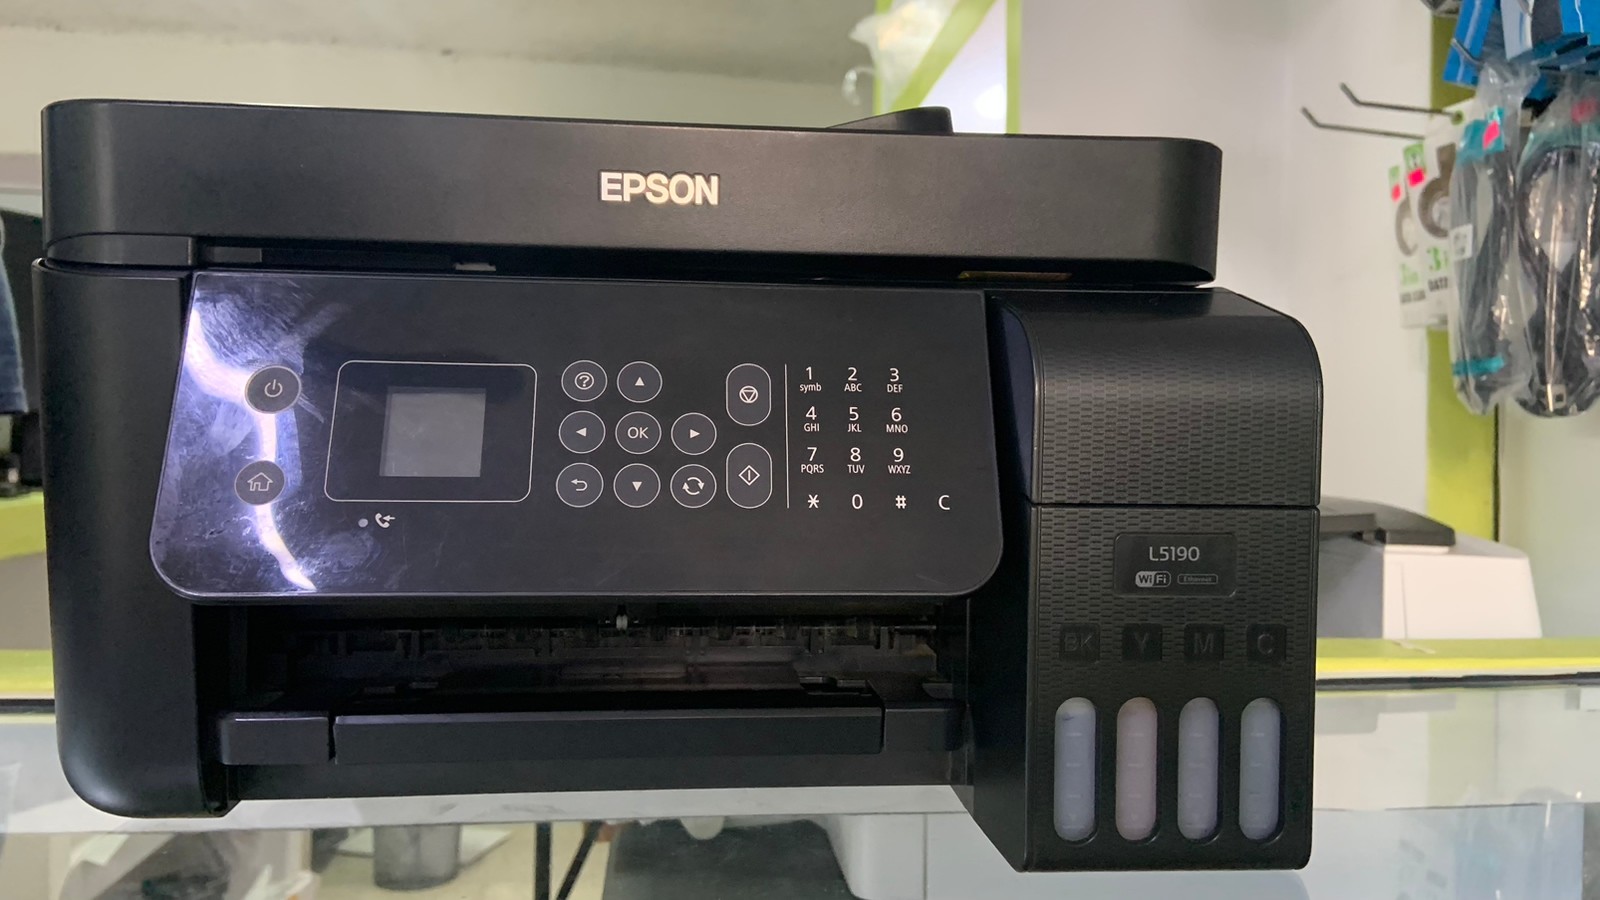 impresoras y scanners - Impresora Epson L5190